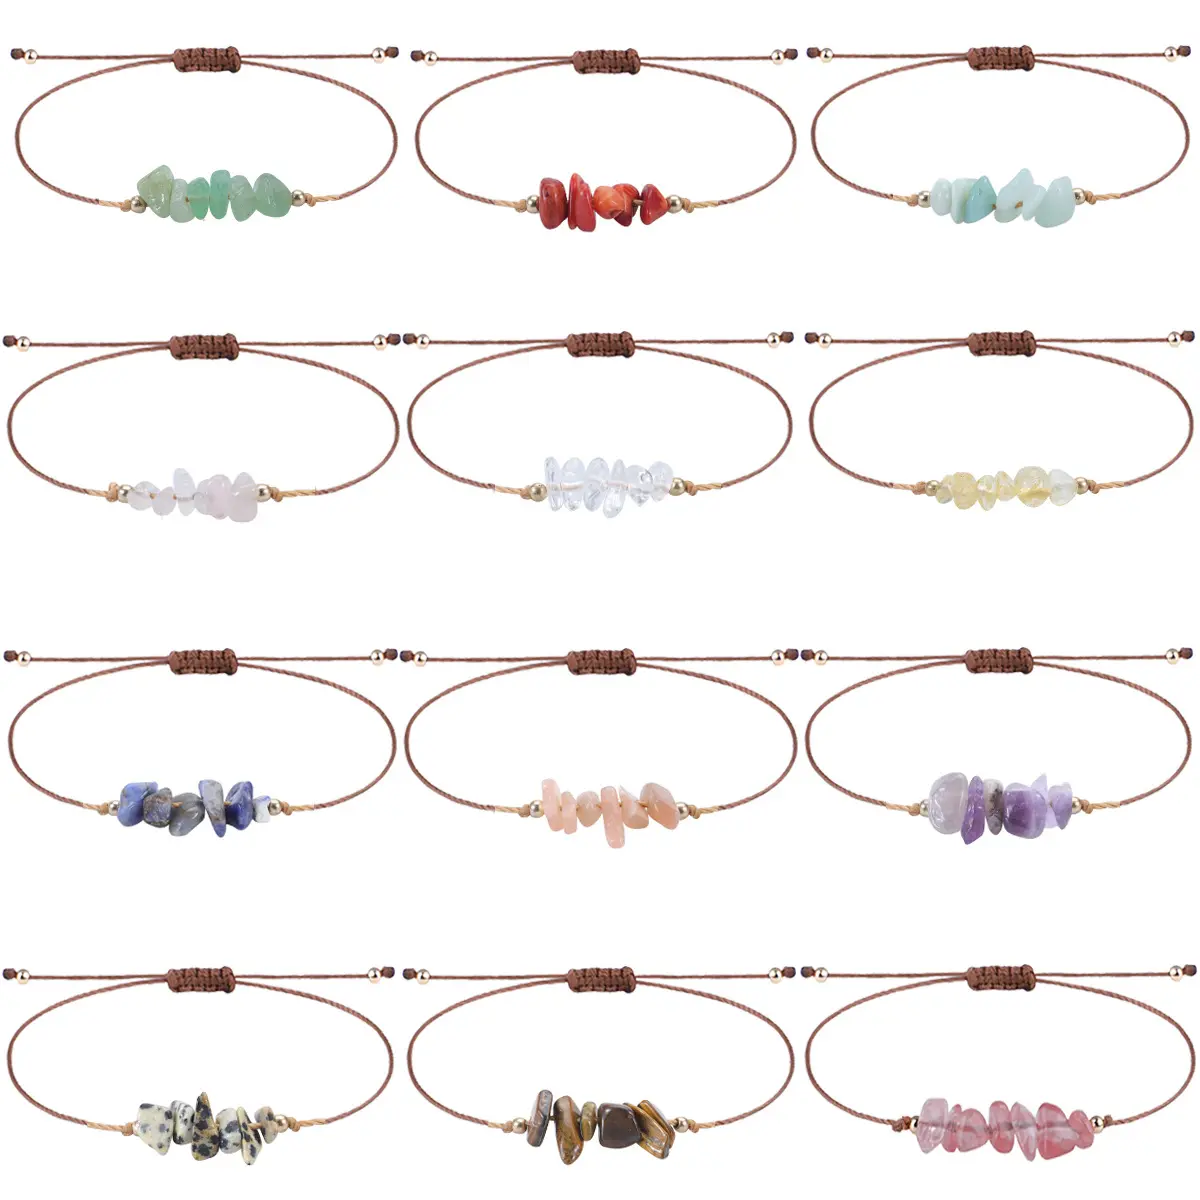 Wholesale Bohemian Irregular gravel natural stone woven adjustable crystal amethyst rose quartz bracelet anklets for women